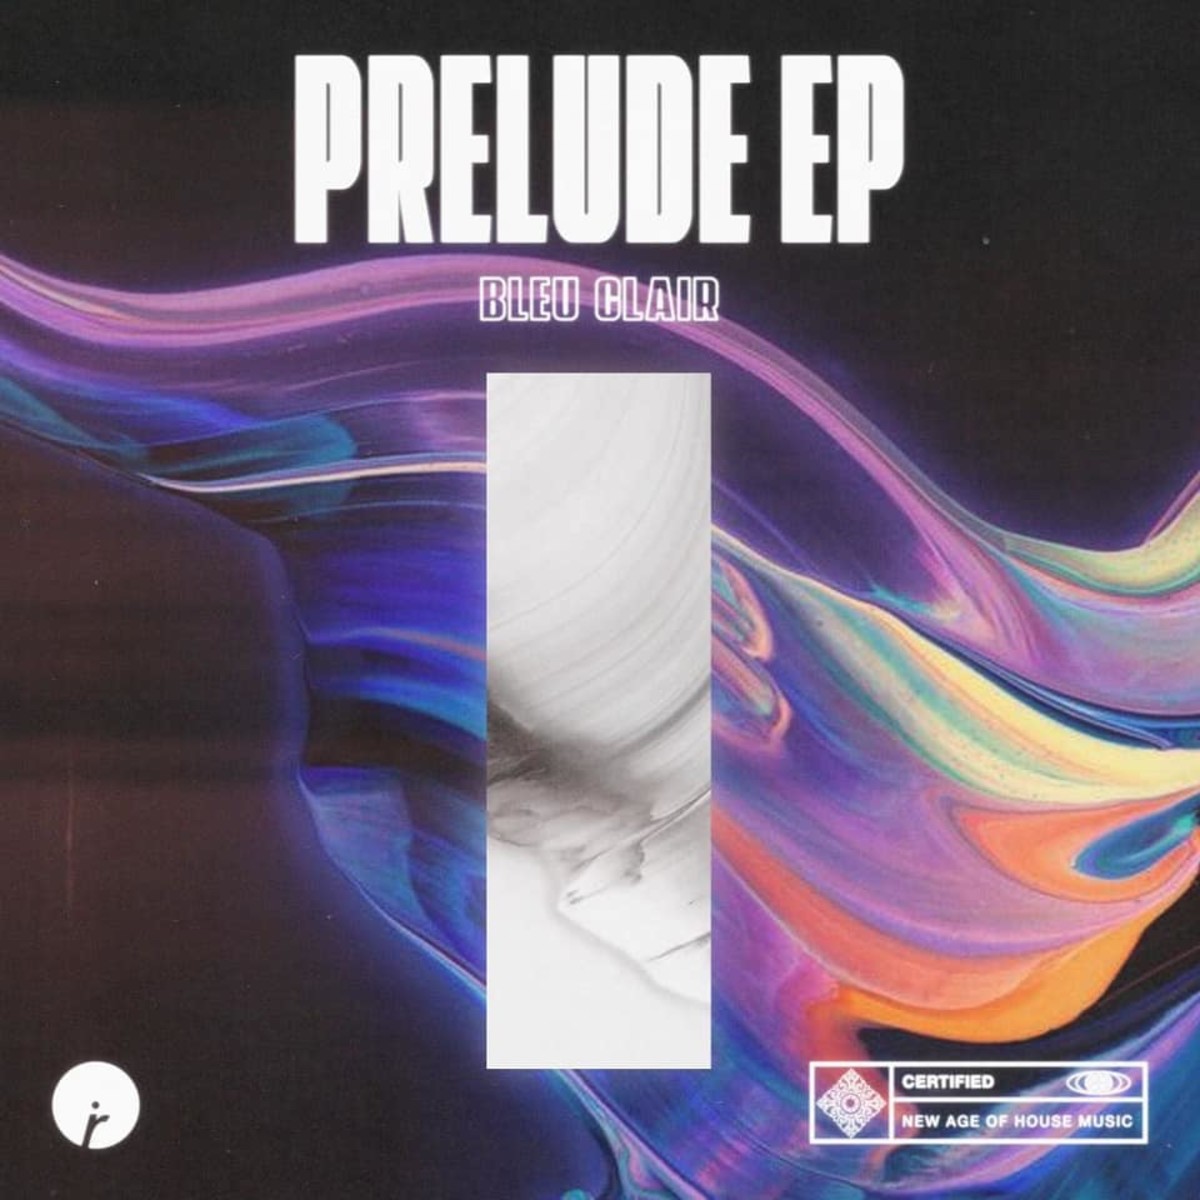 The cover art of Bleu Clair's "Prelude" EP. 